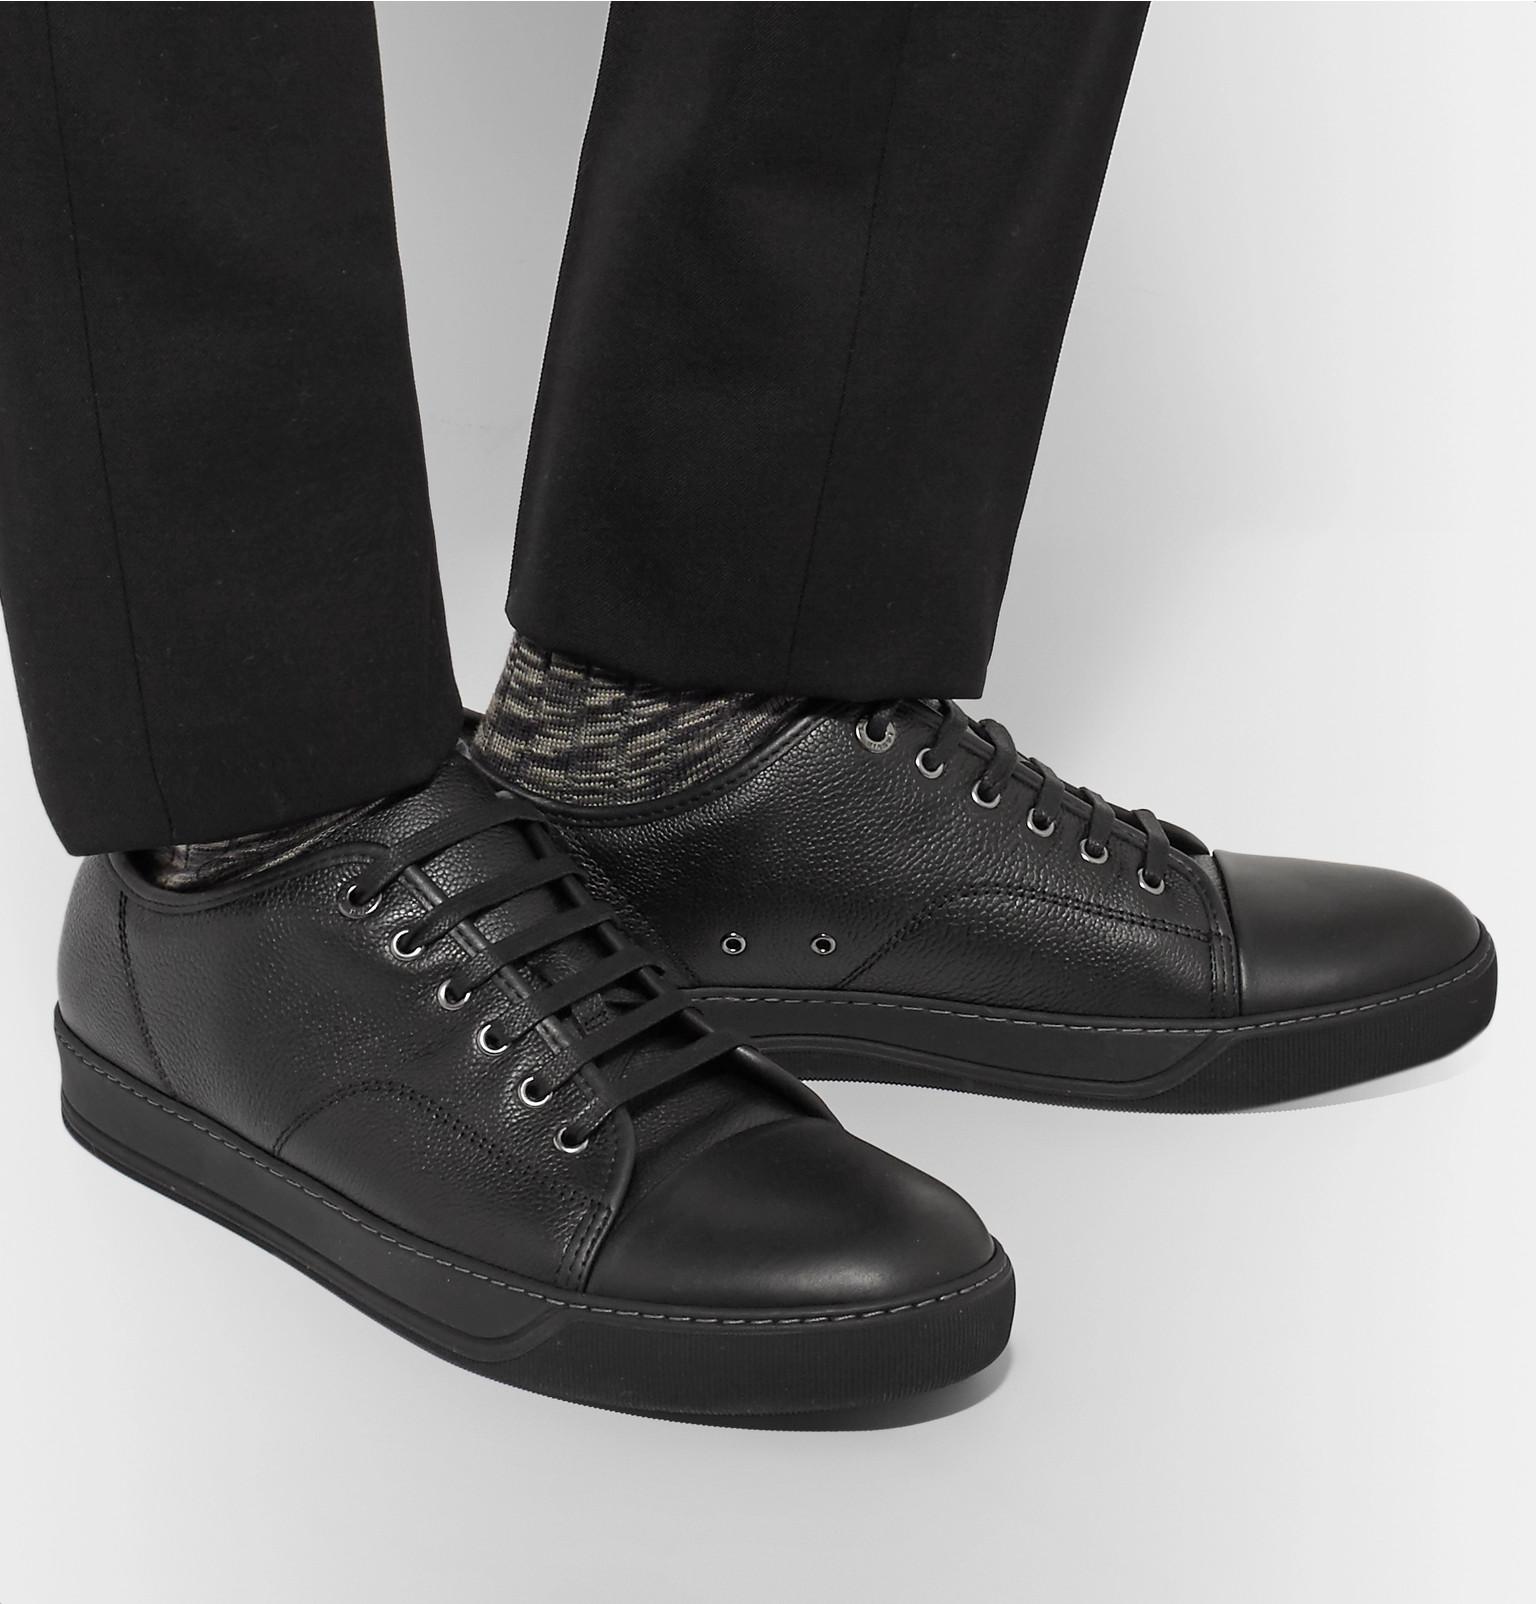 Lanvin Cap-toe Full-grain Leather Sneakers in Black for Men - Lyst